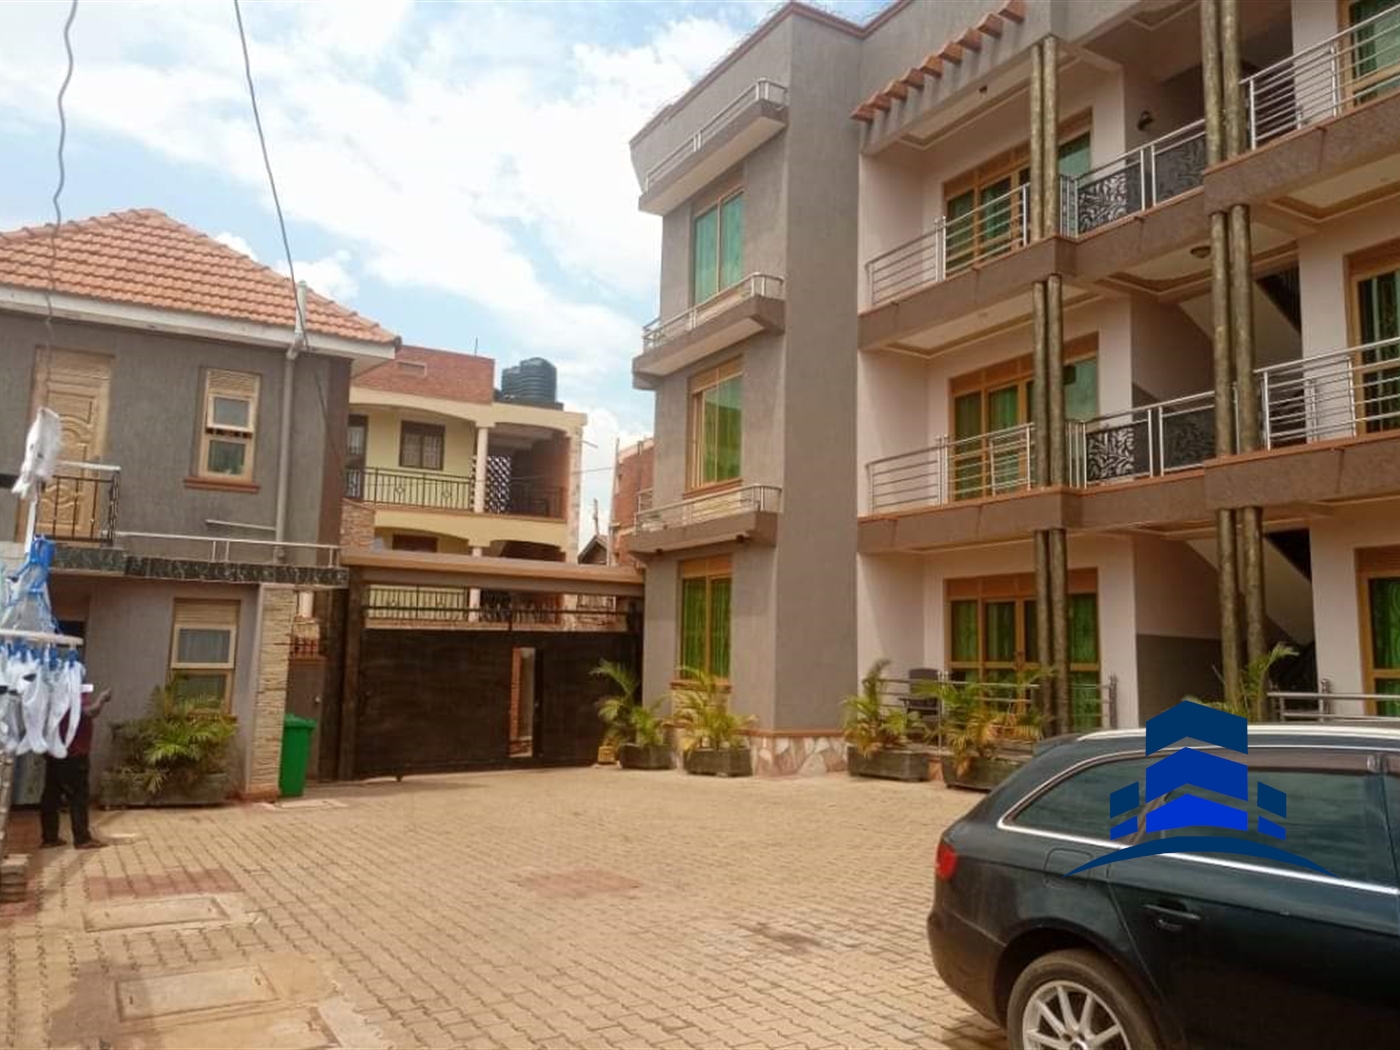 Apartment block for sale in Munyonyo Kampala